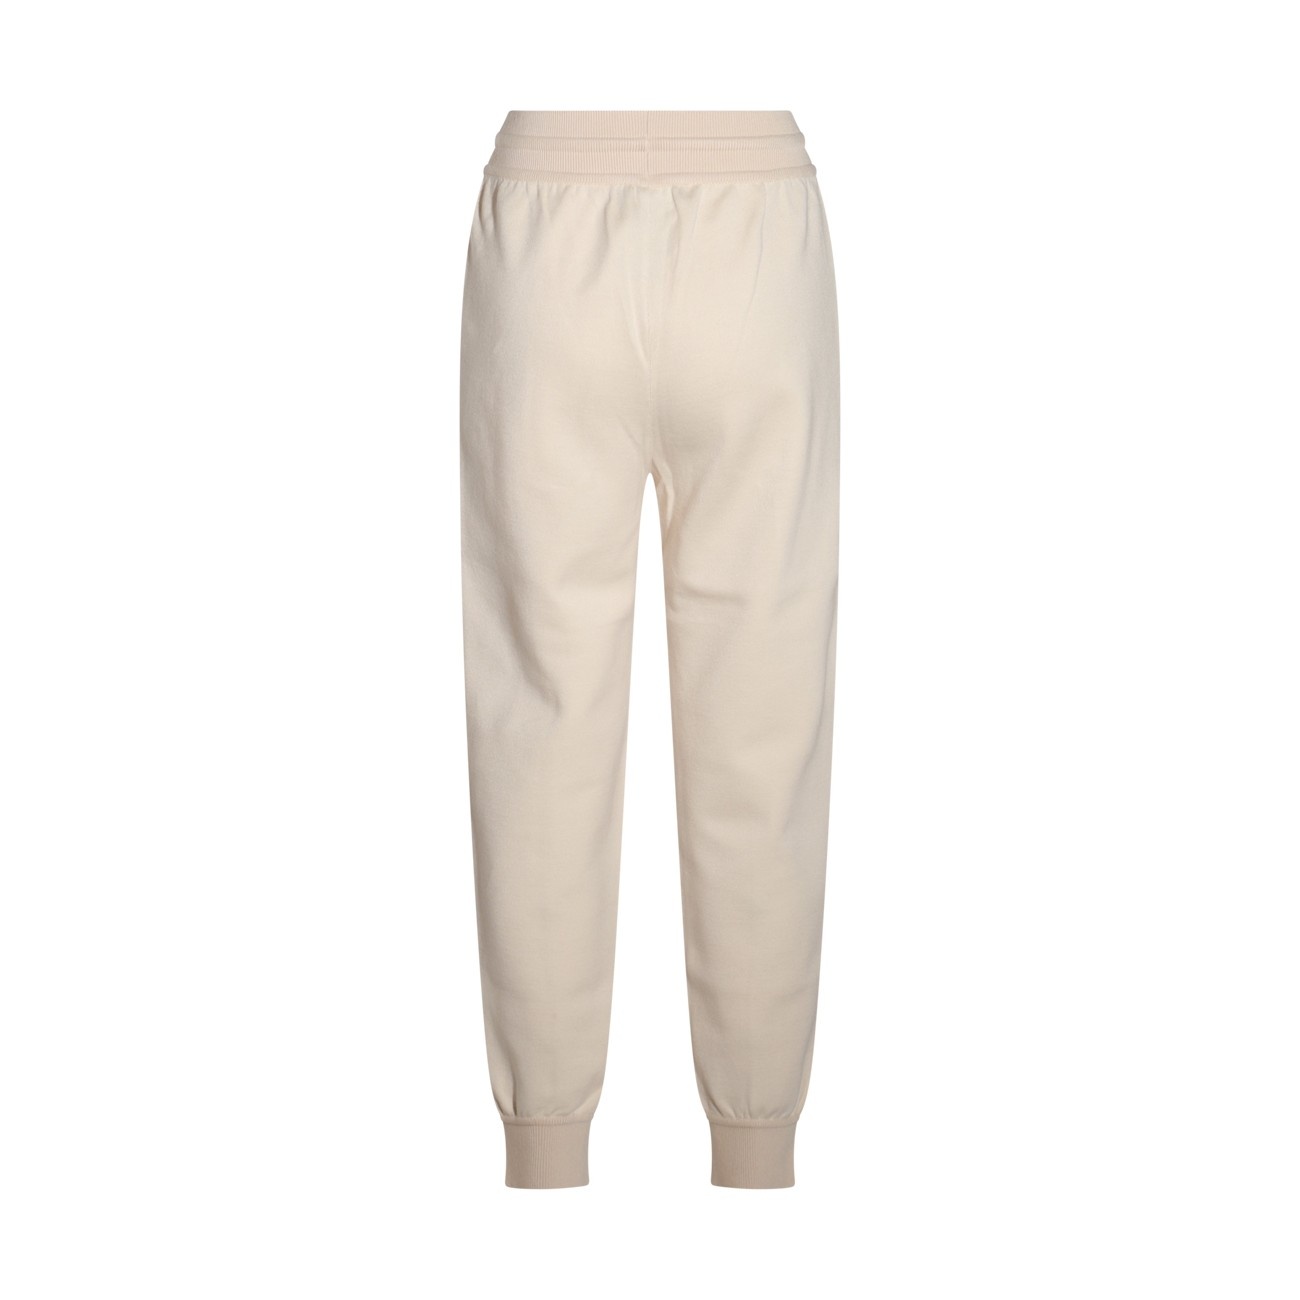 white wool pants - 2